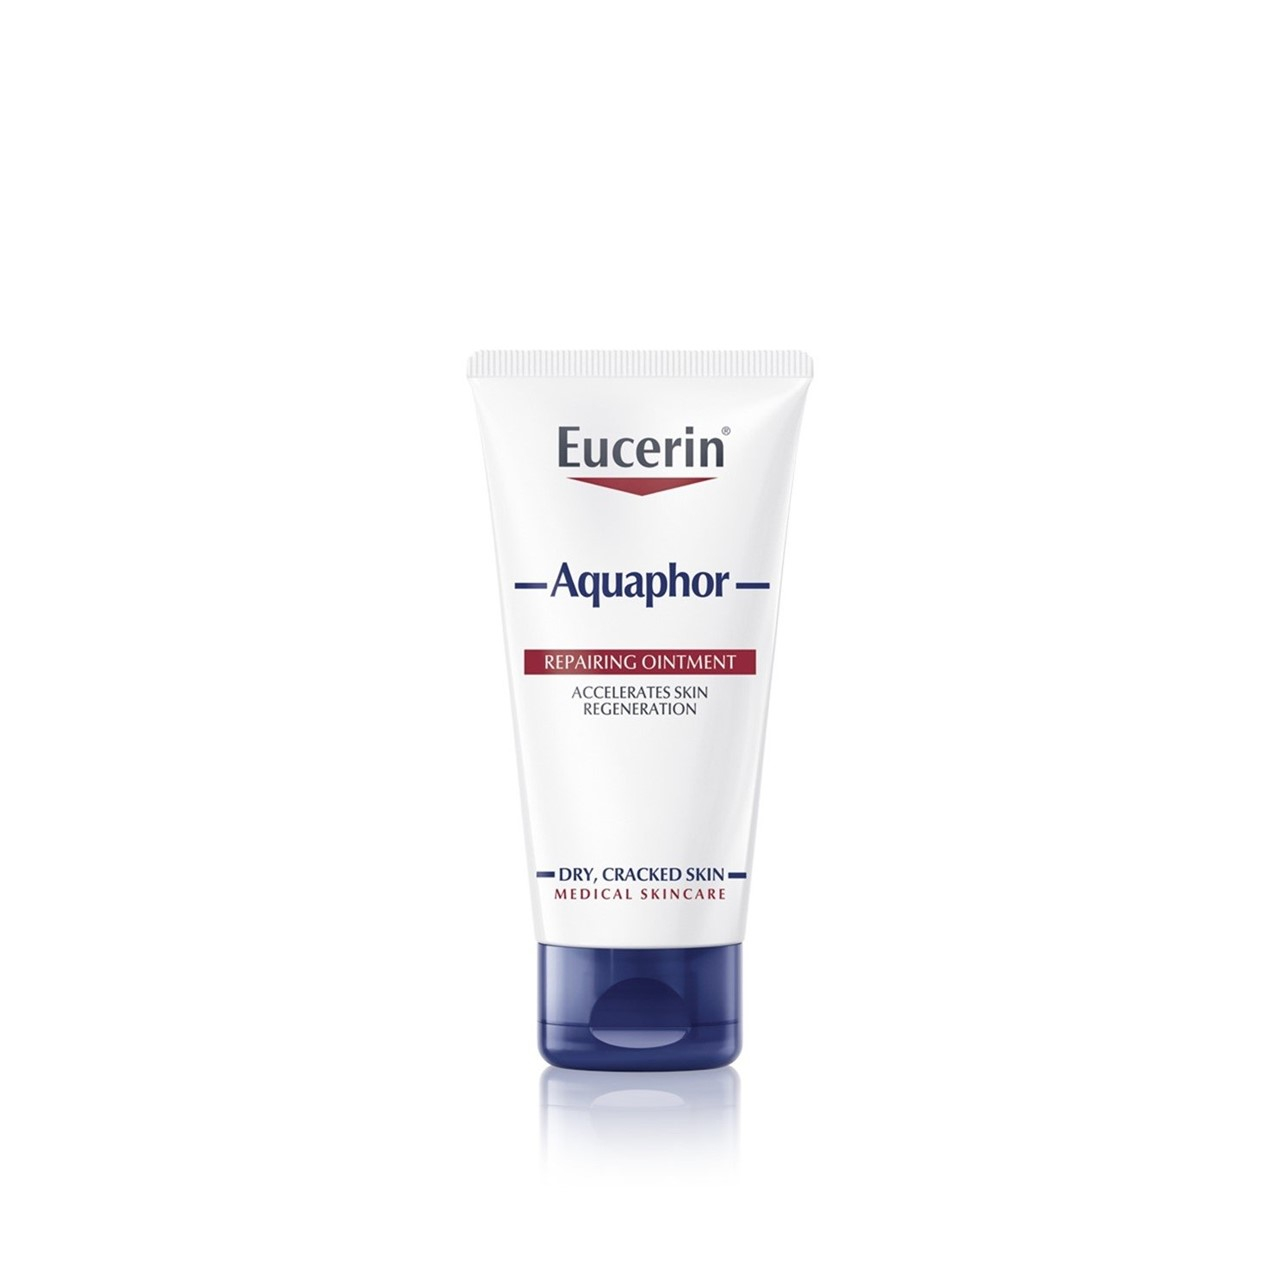 Eucerin Aquaphor Repairing Ointment 45ml (1.52fl oz)